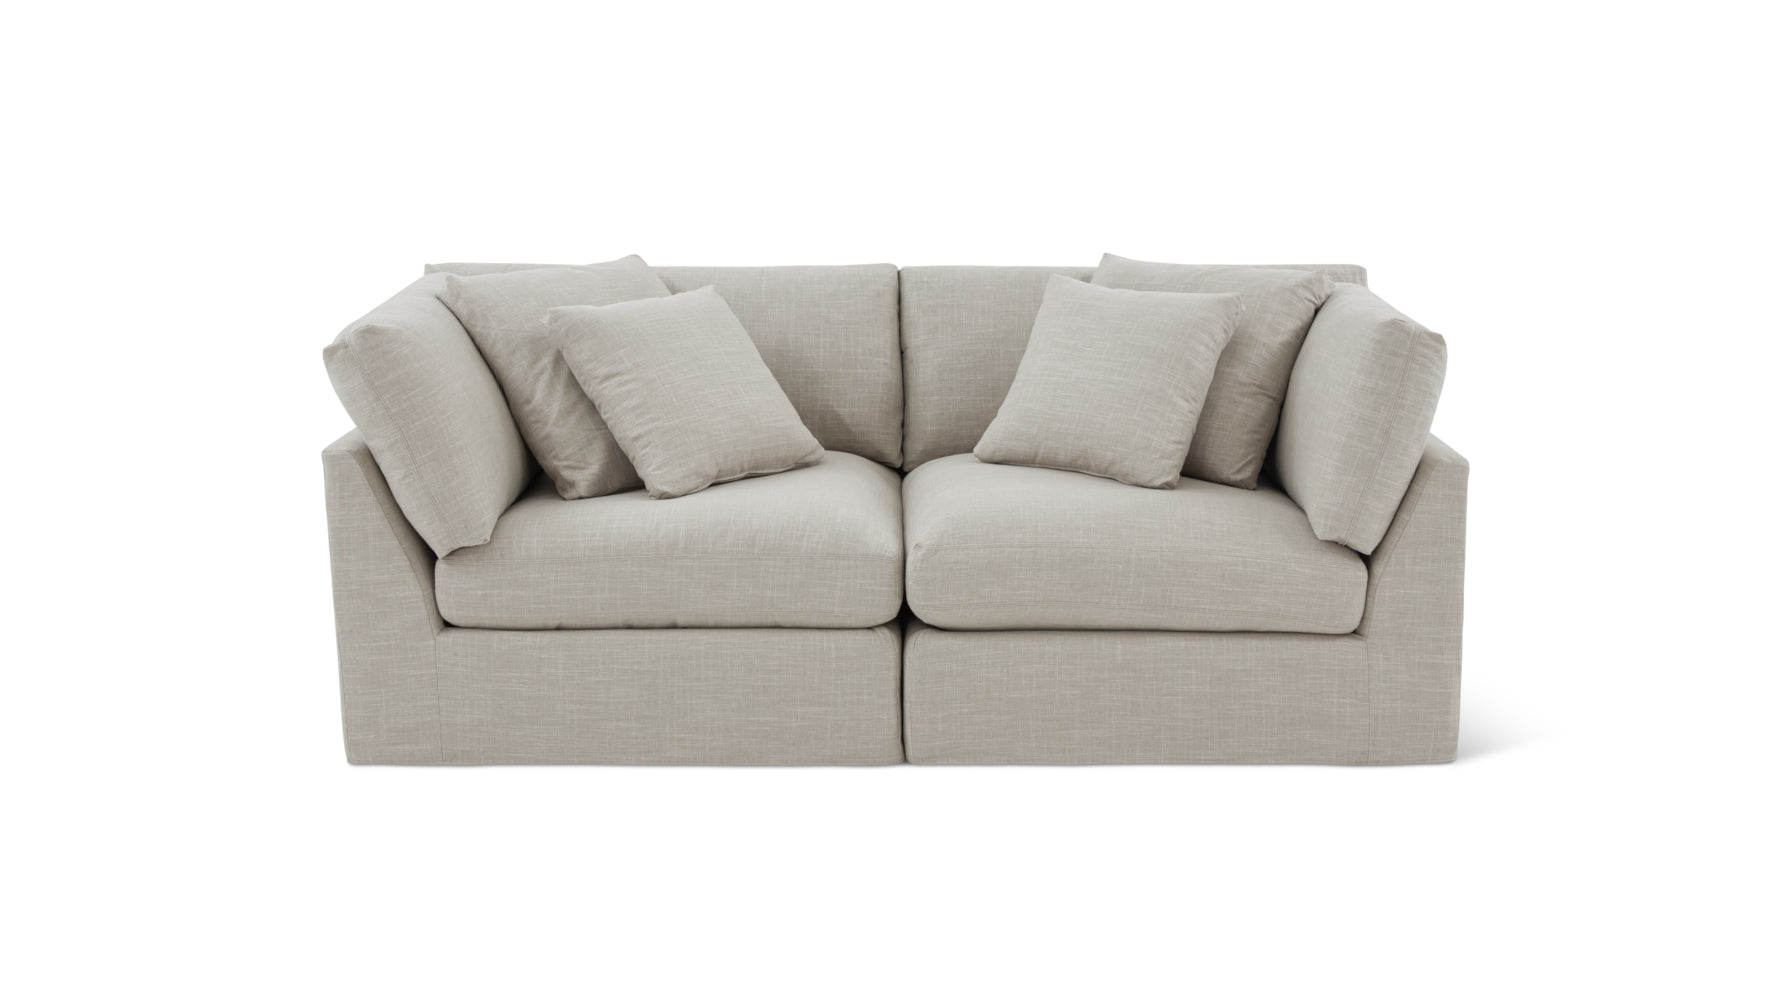 Get Together™ 2-Piece Modular Sofa, Large, Light Pebble - Image 1